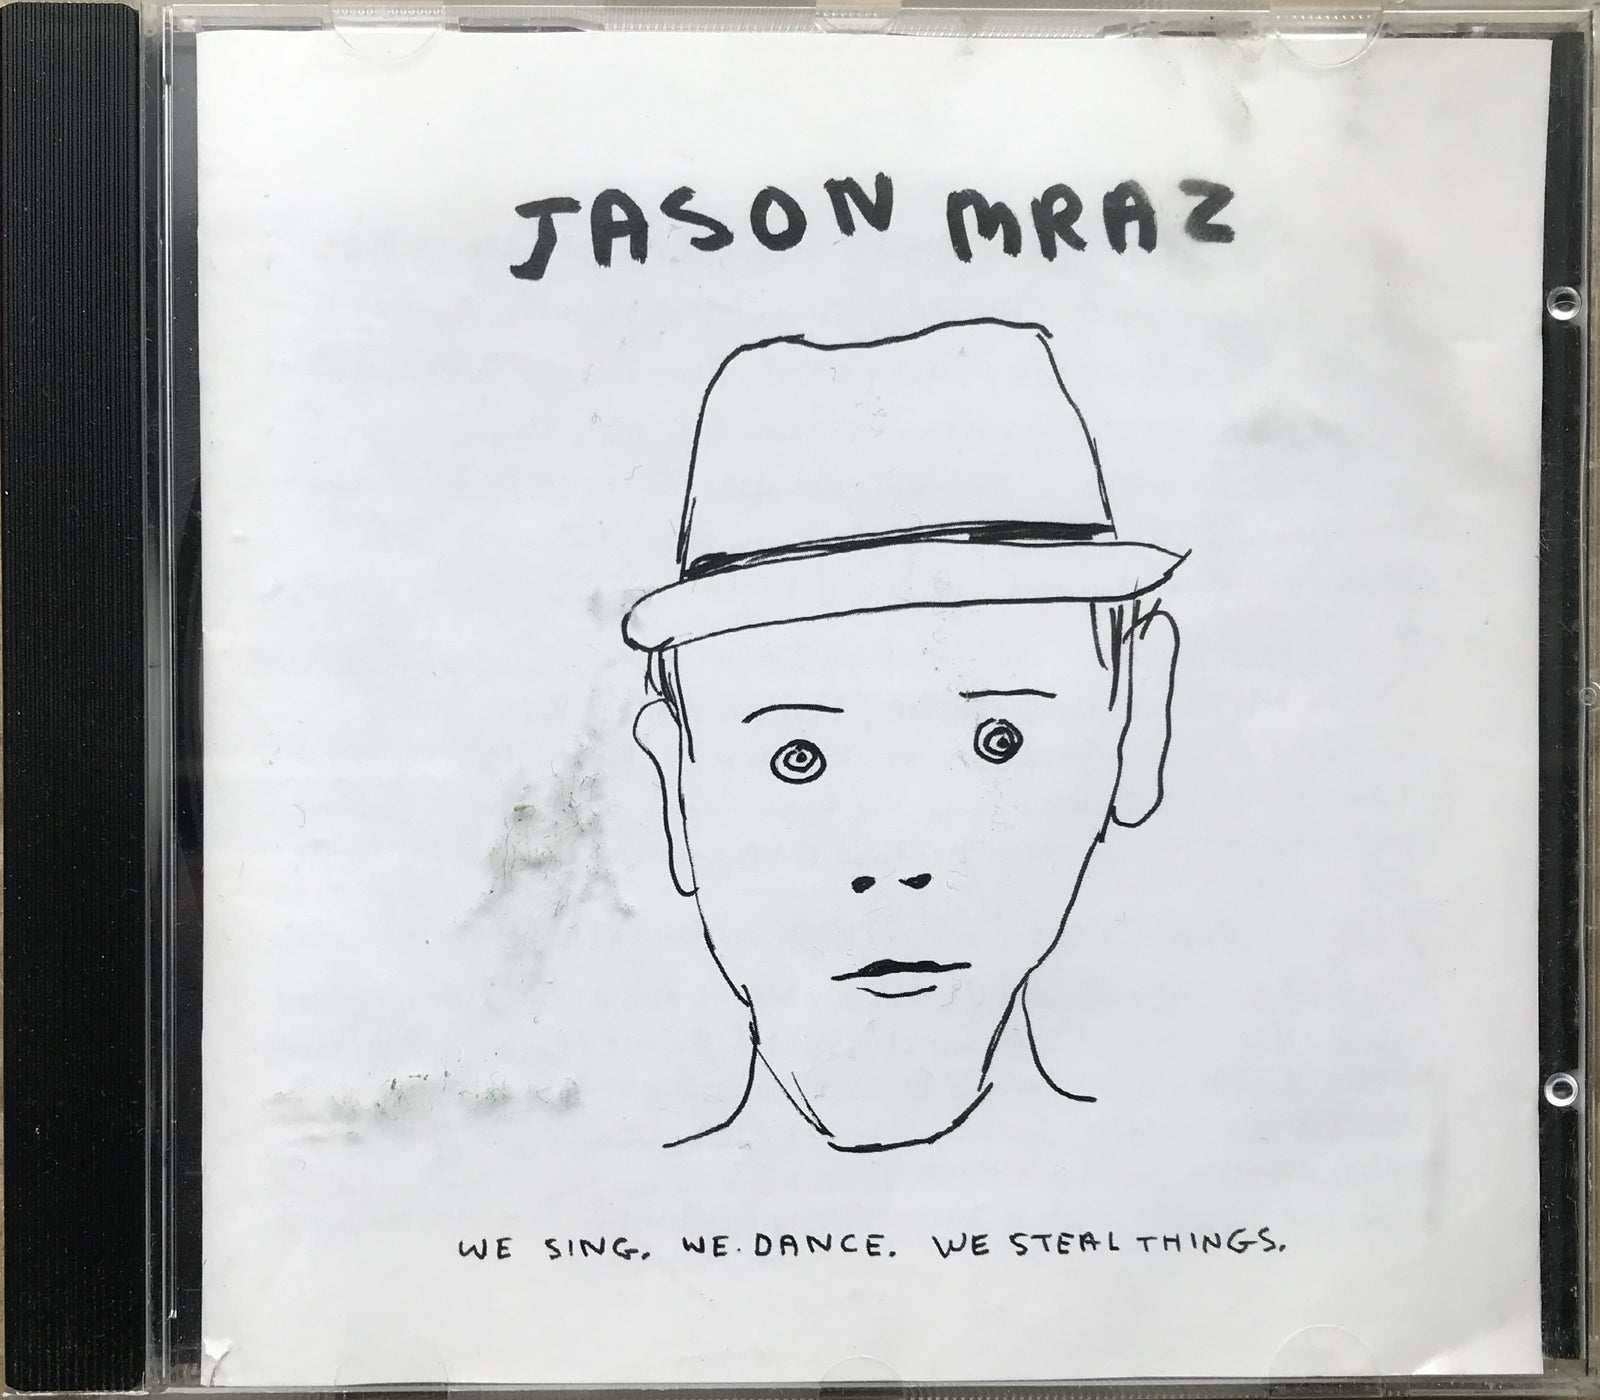 Jason Mraz: We sing, we dance, we steal things